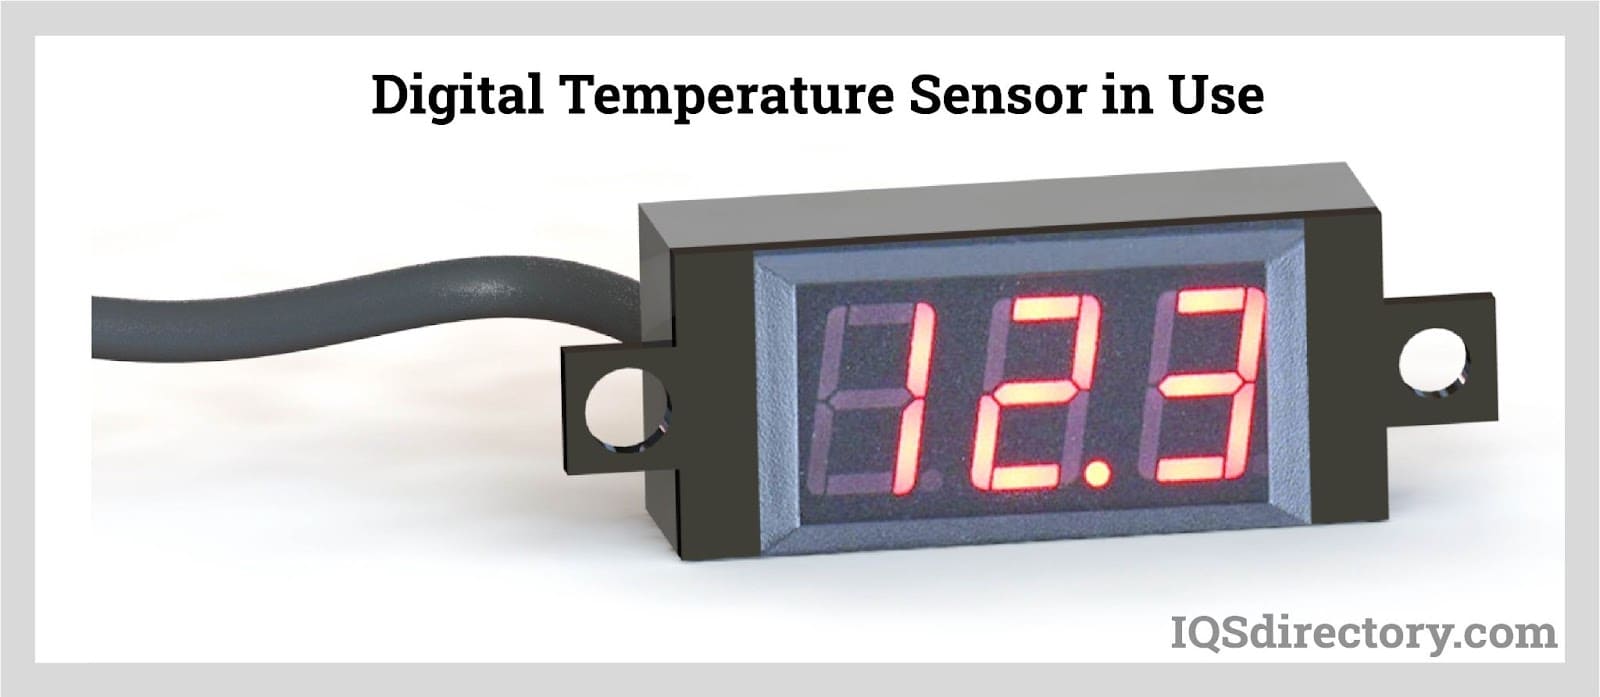 Digital Temperature Sensor in Use